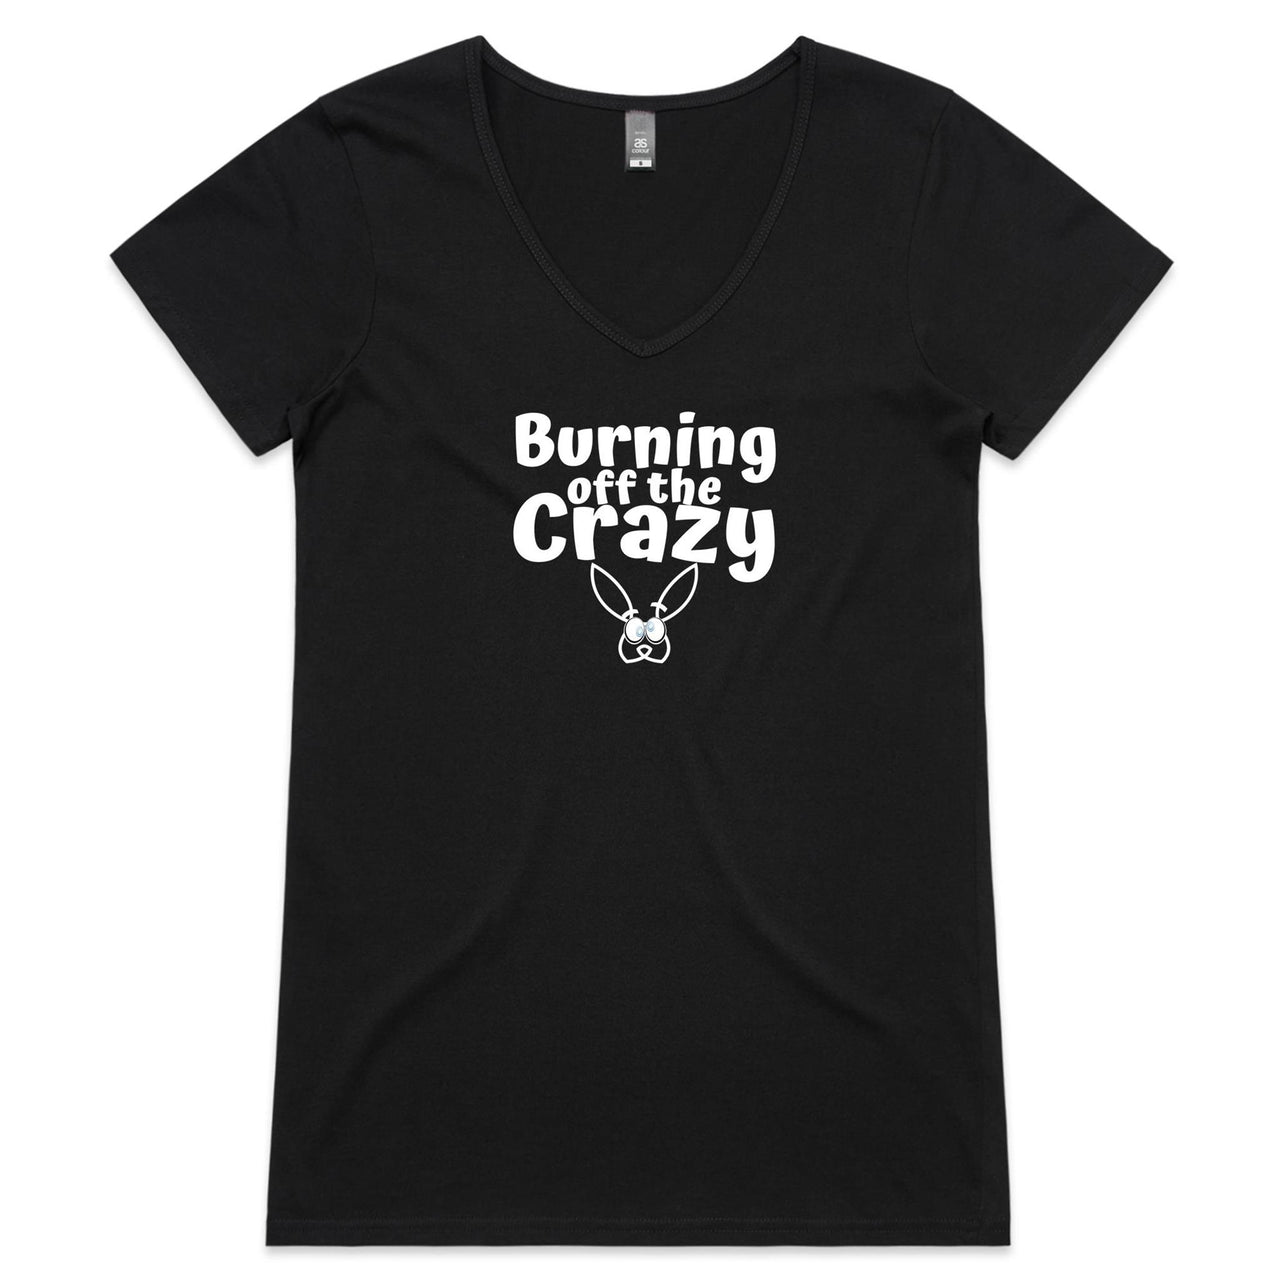 CBF Burning off the Crazy V-Neck T-Shirt